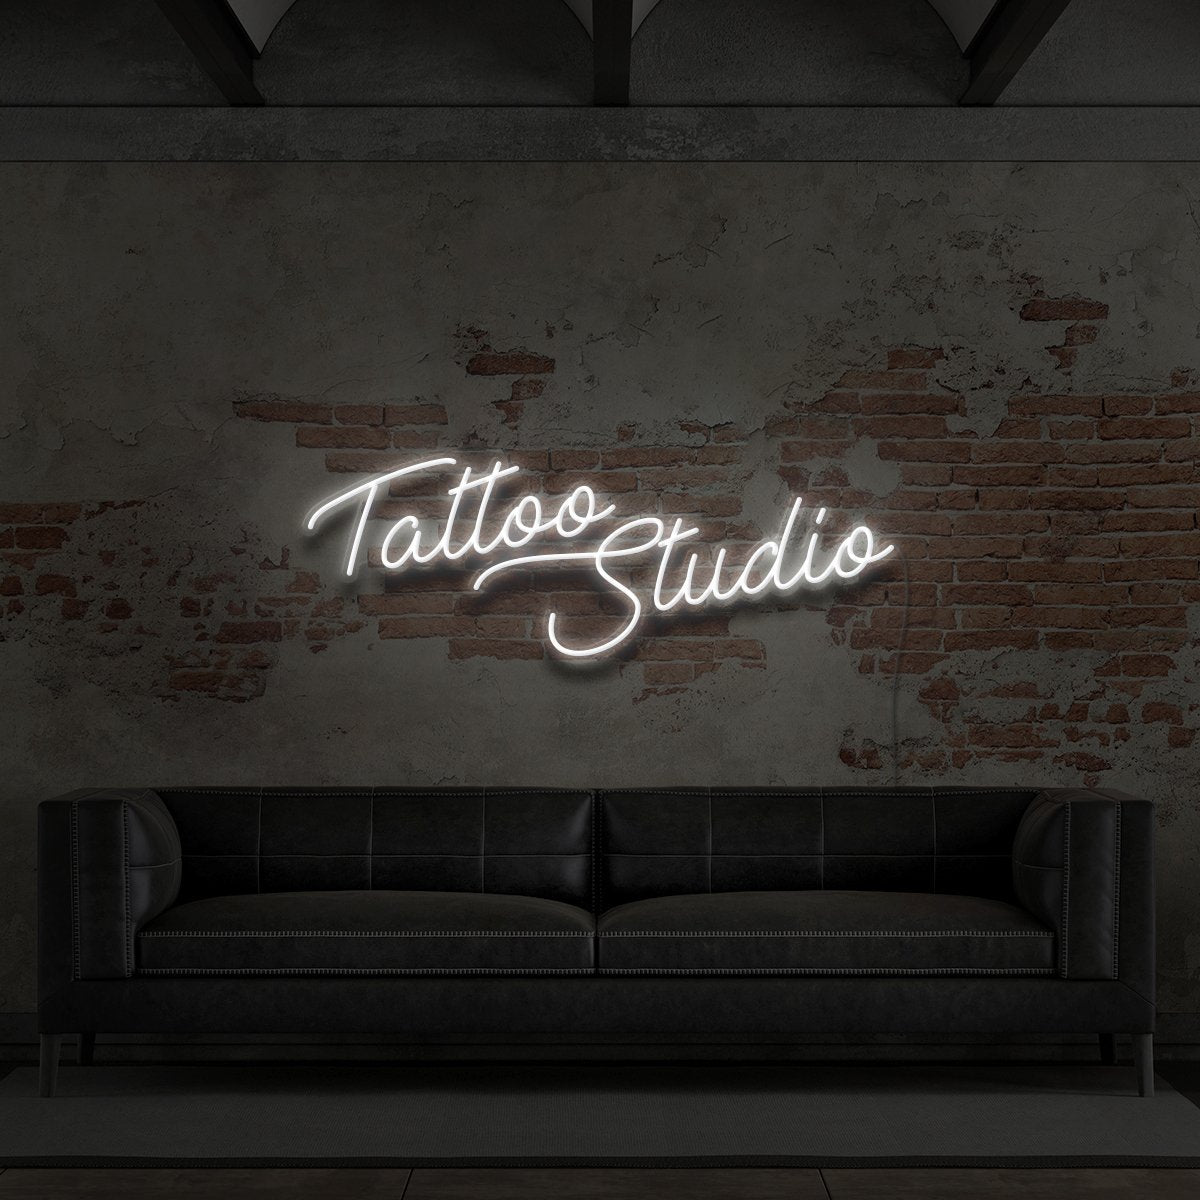 LED RGB Tattoo Studio Neon Light Business Sign for Store Wall Decor Artwork  Gift | eBay